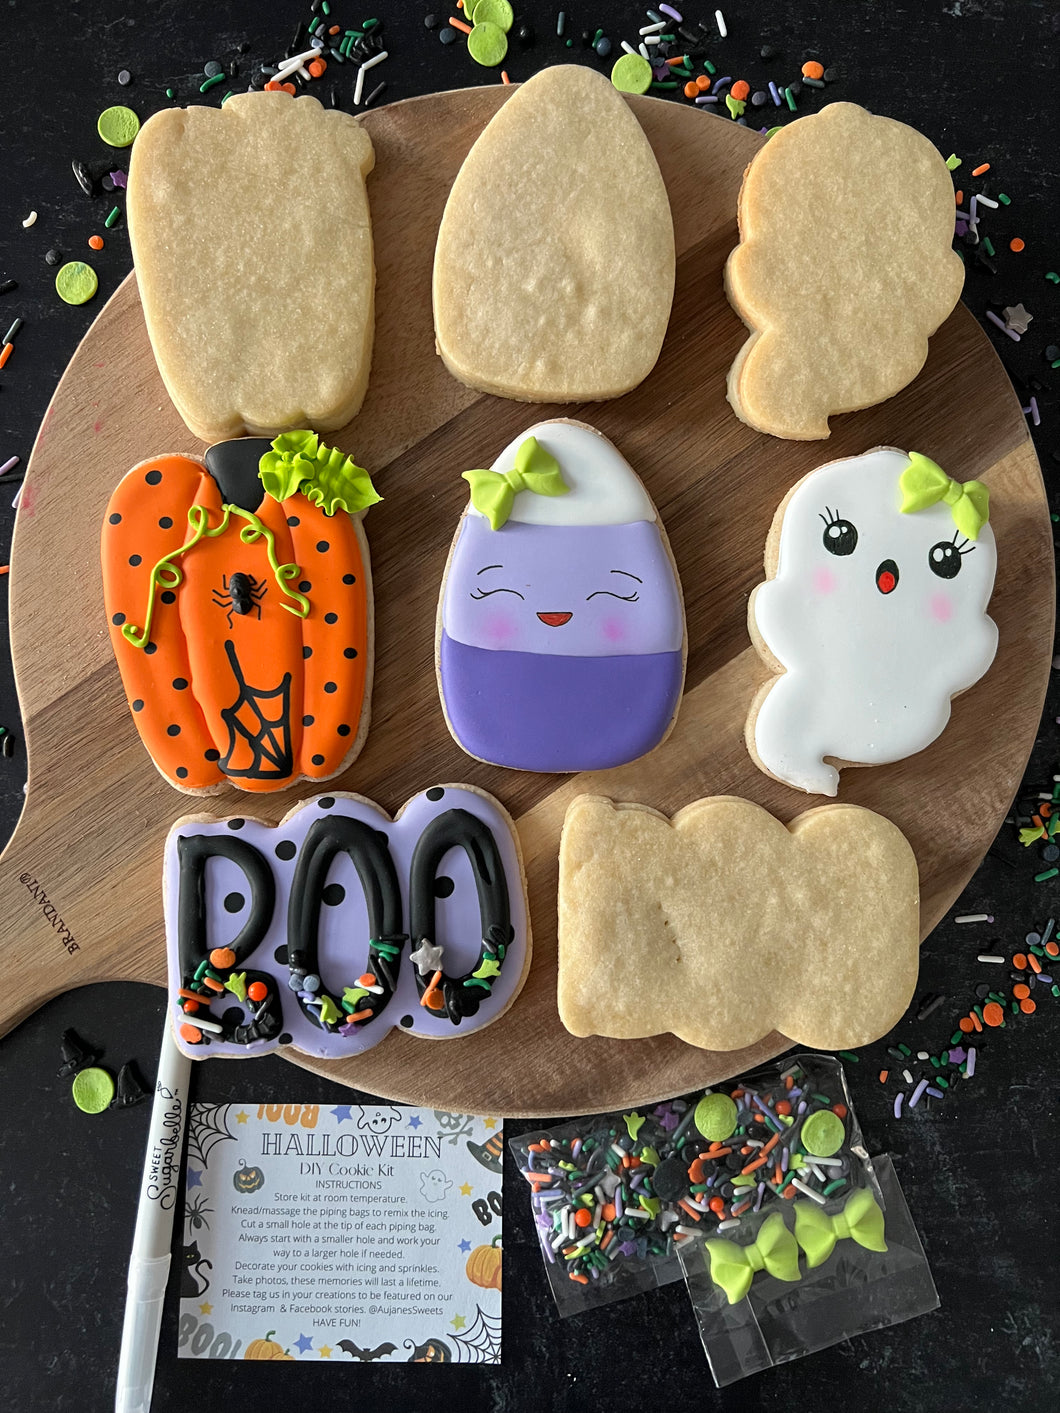 DIY Halloween Cookie Decorating Kit